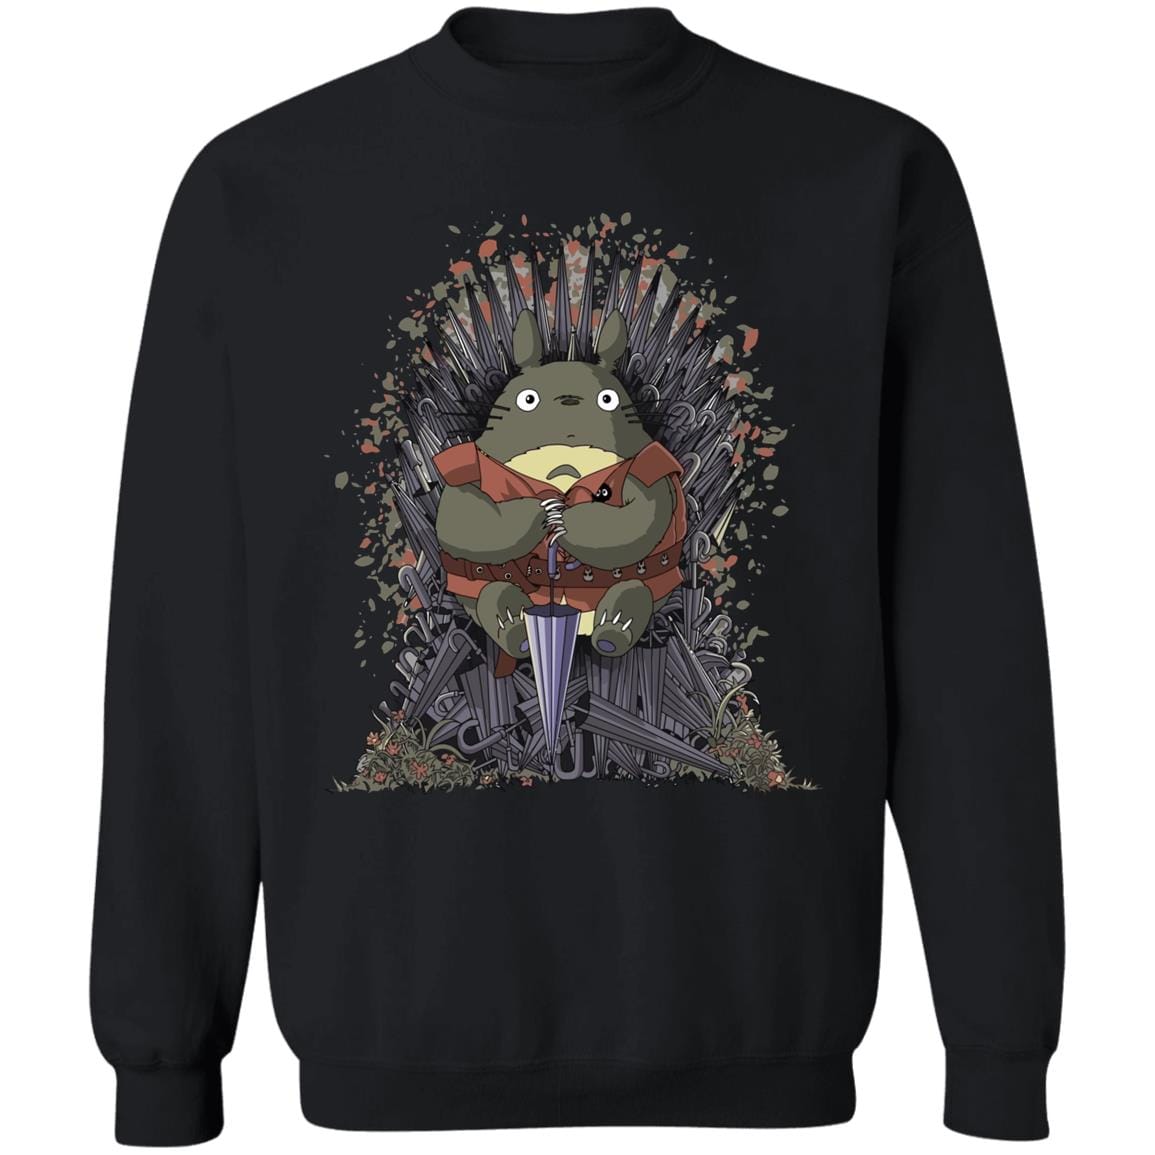 Totoro Game of Thrones Sweatshirt